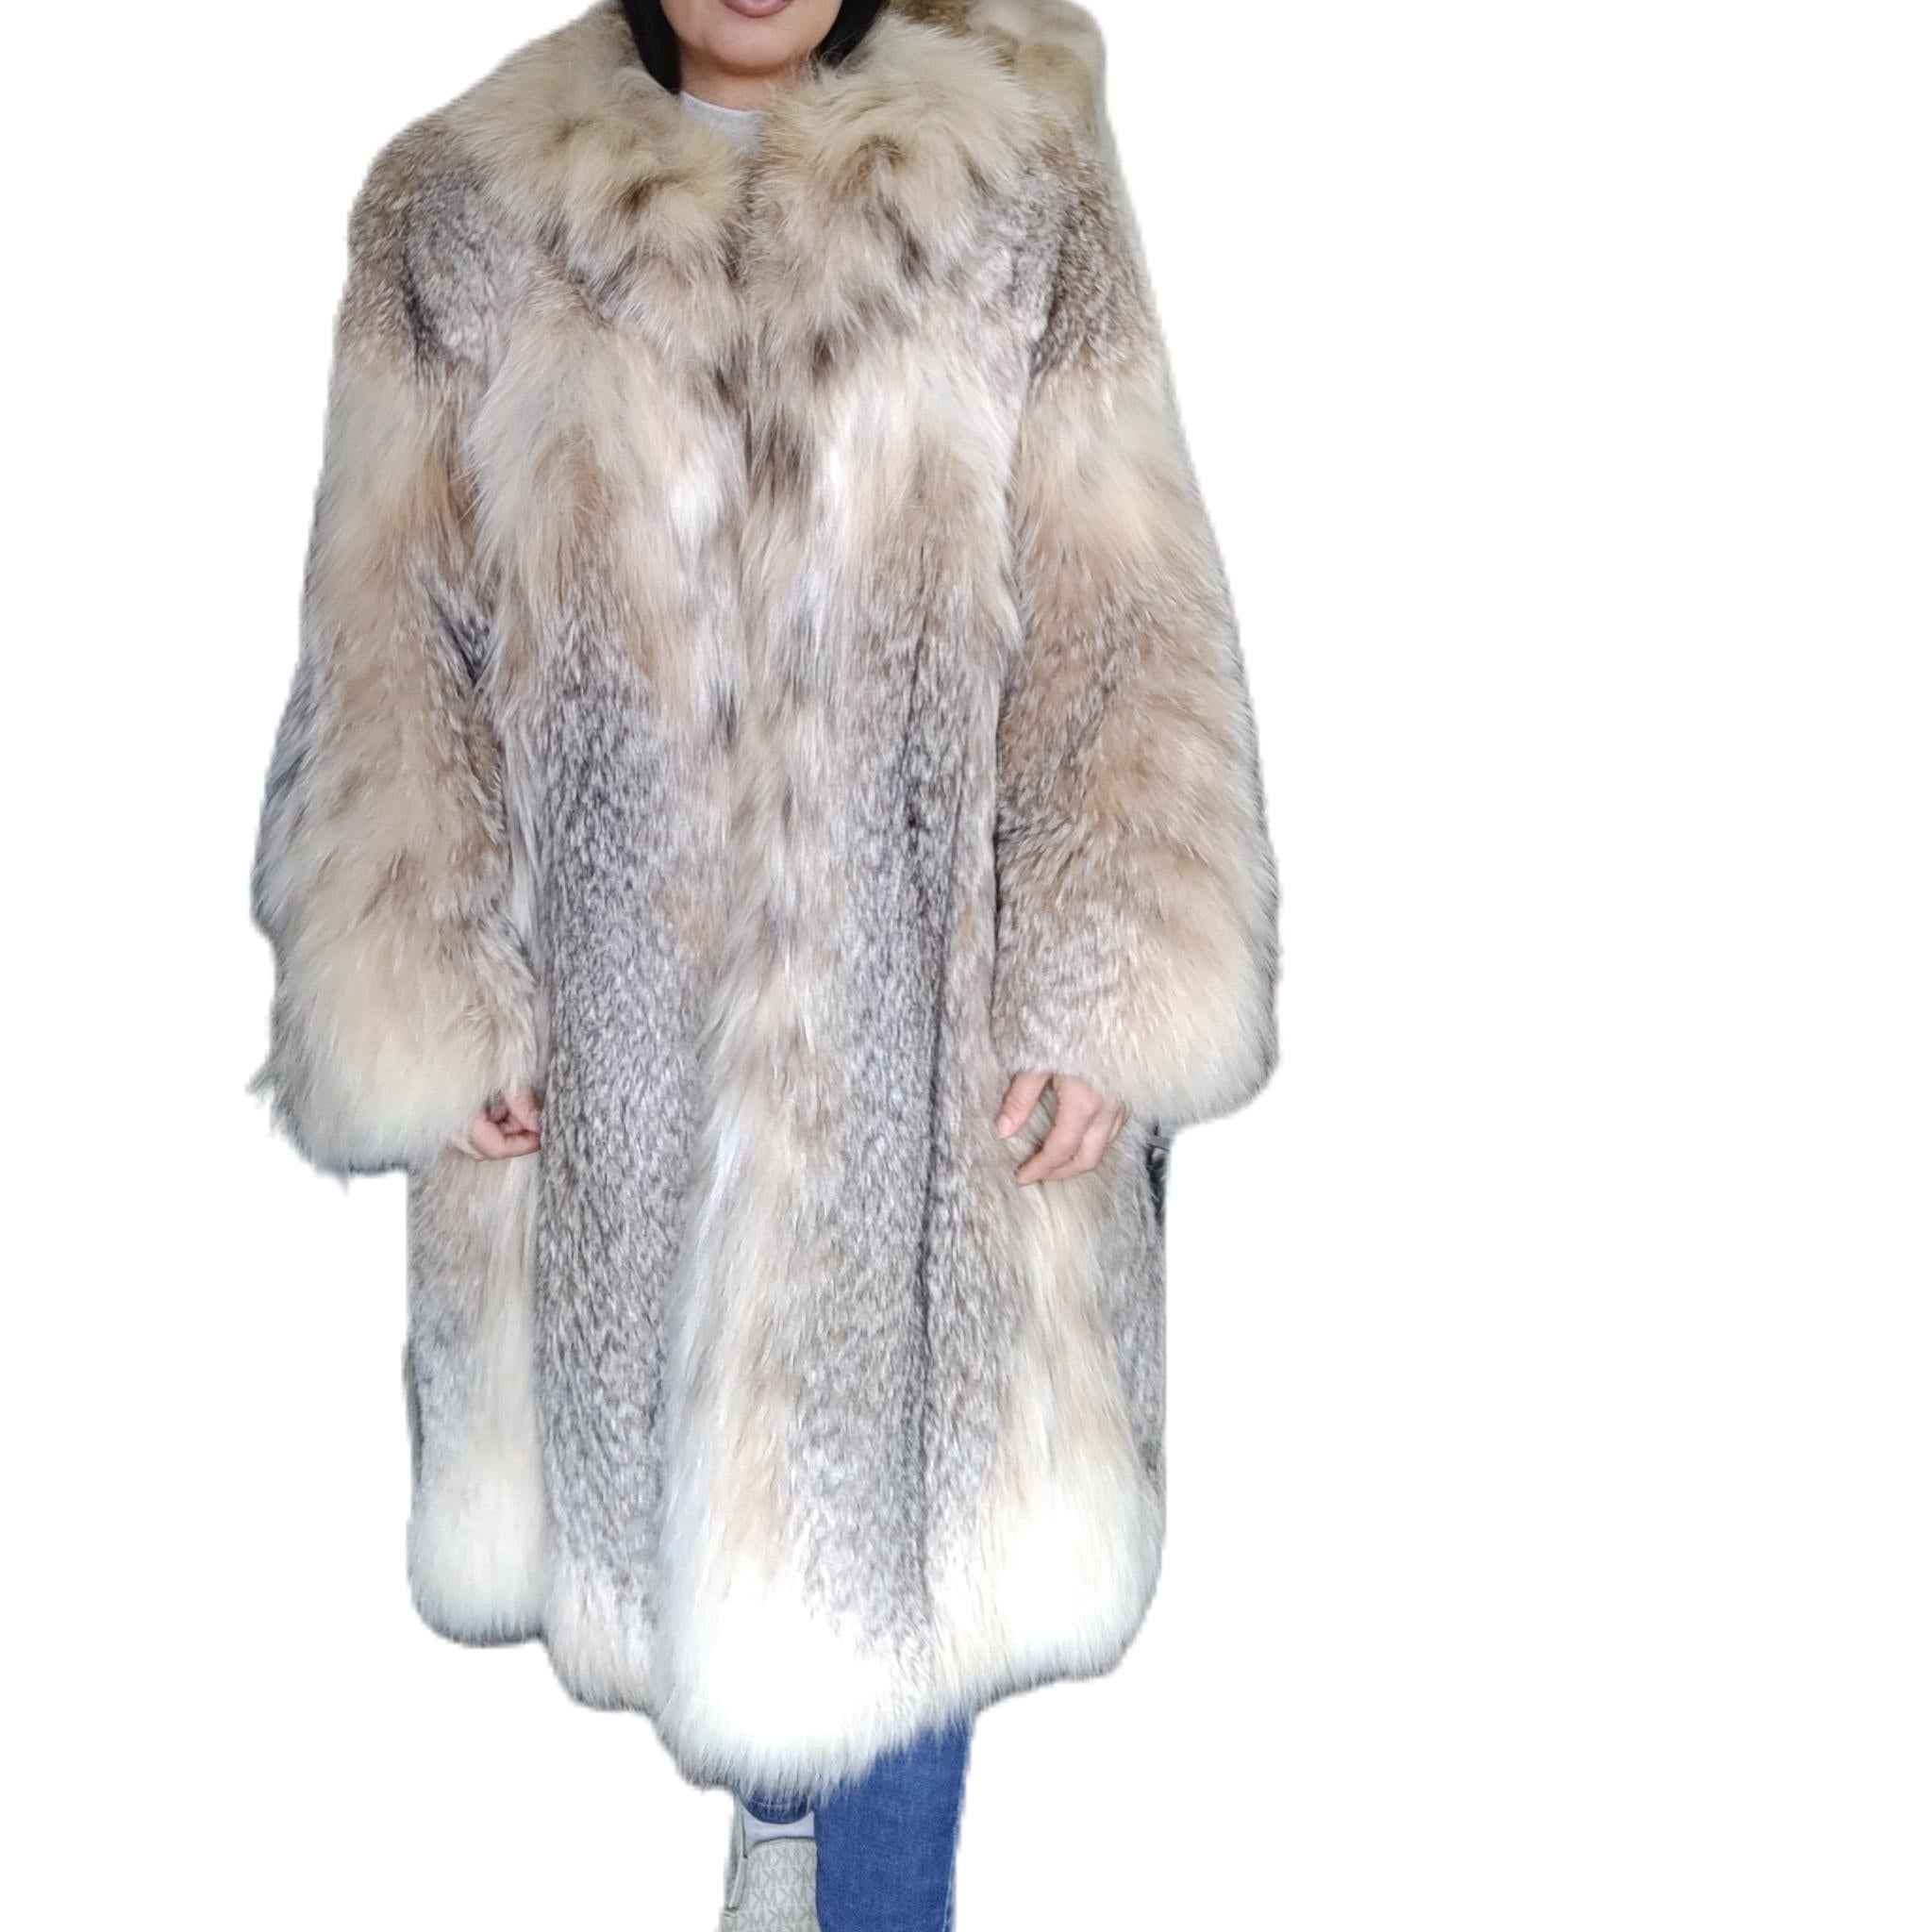 lynx belly fur coat